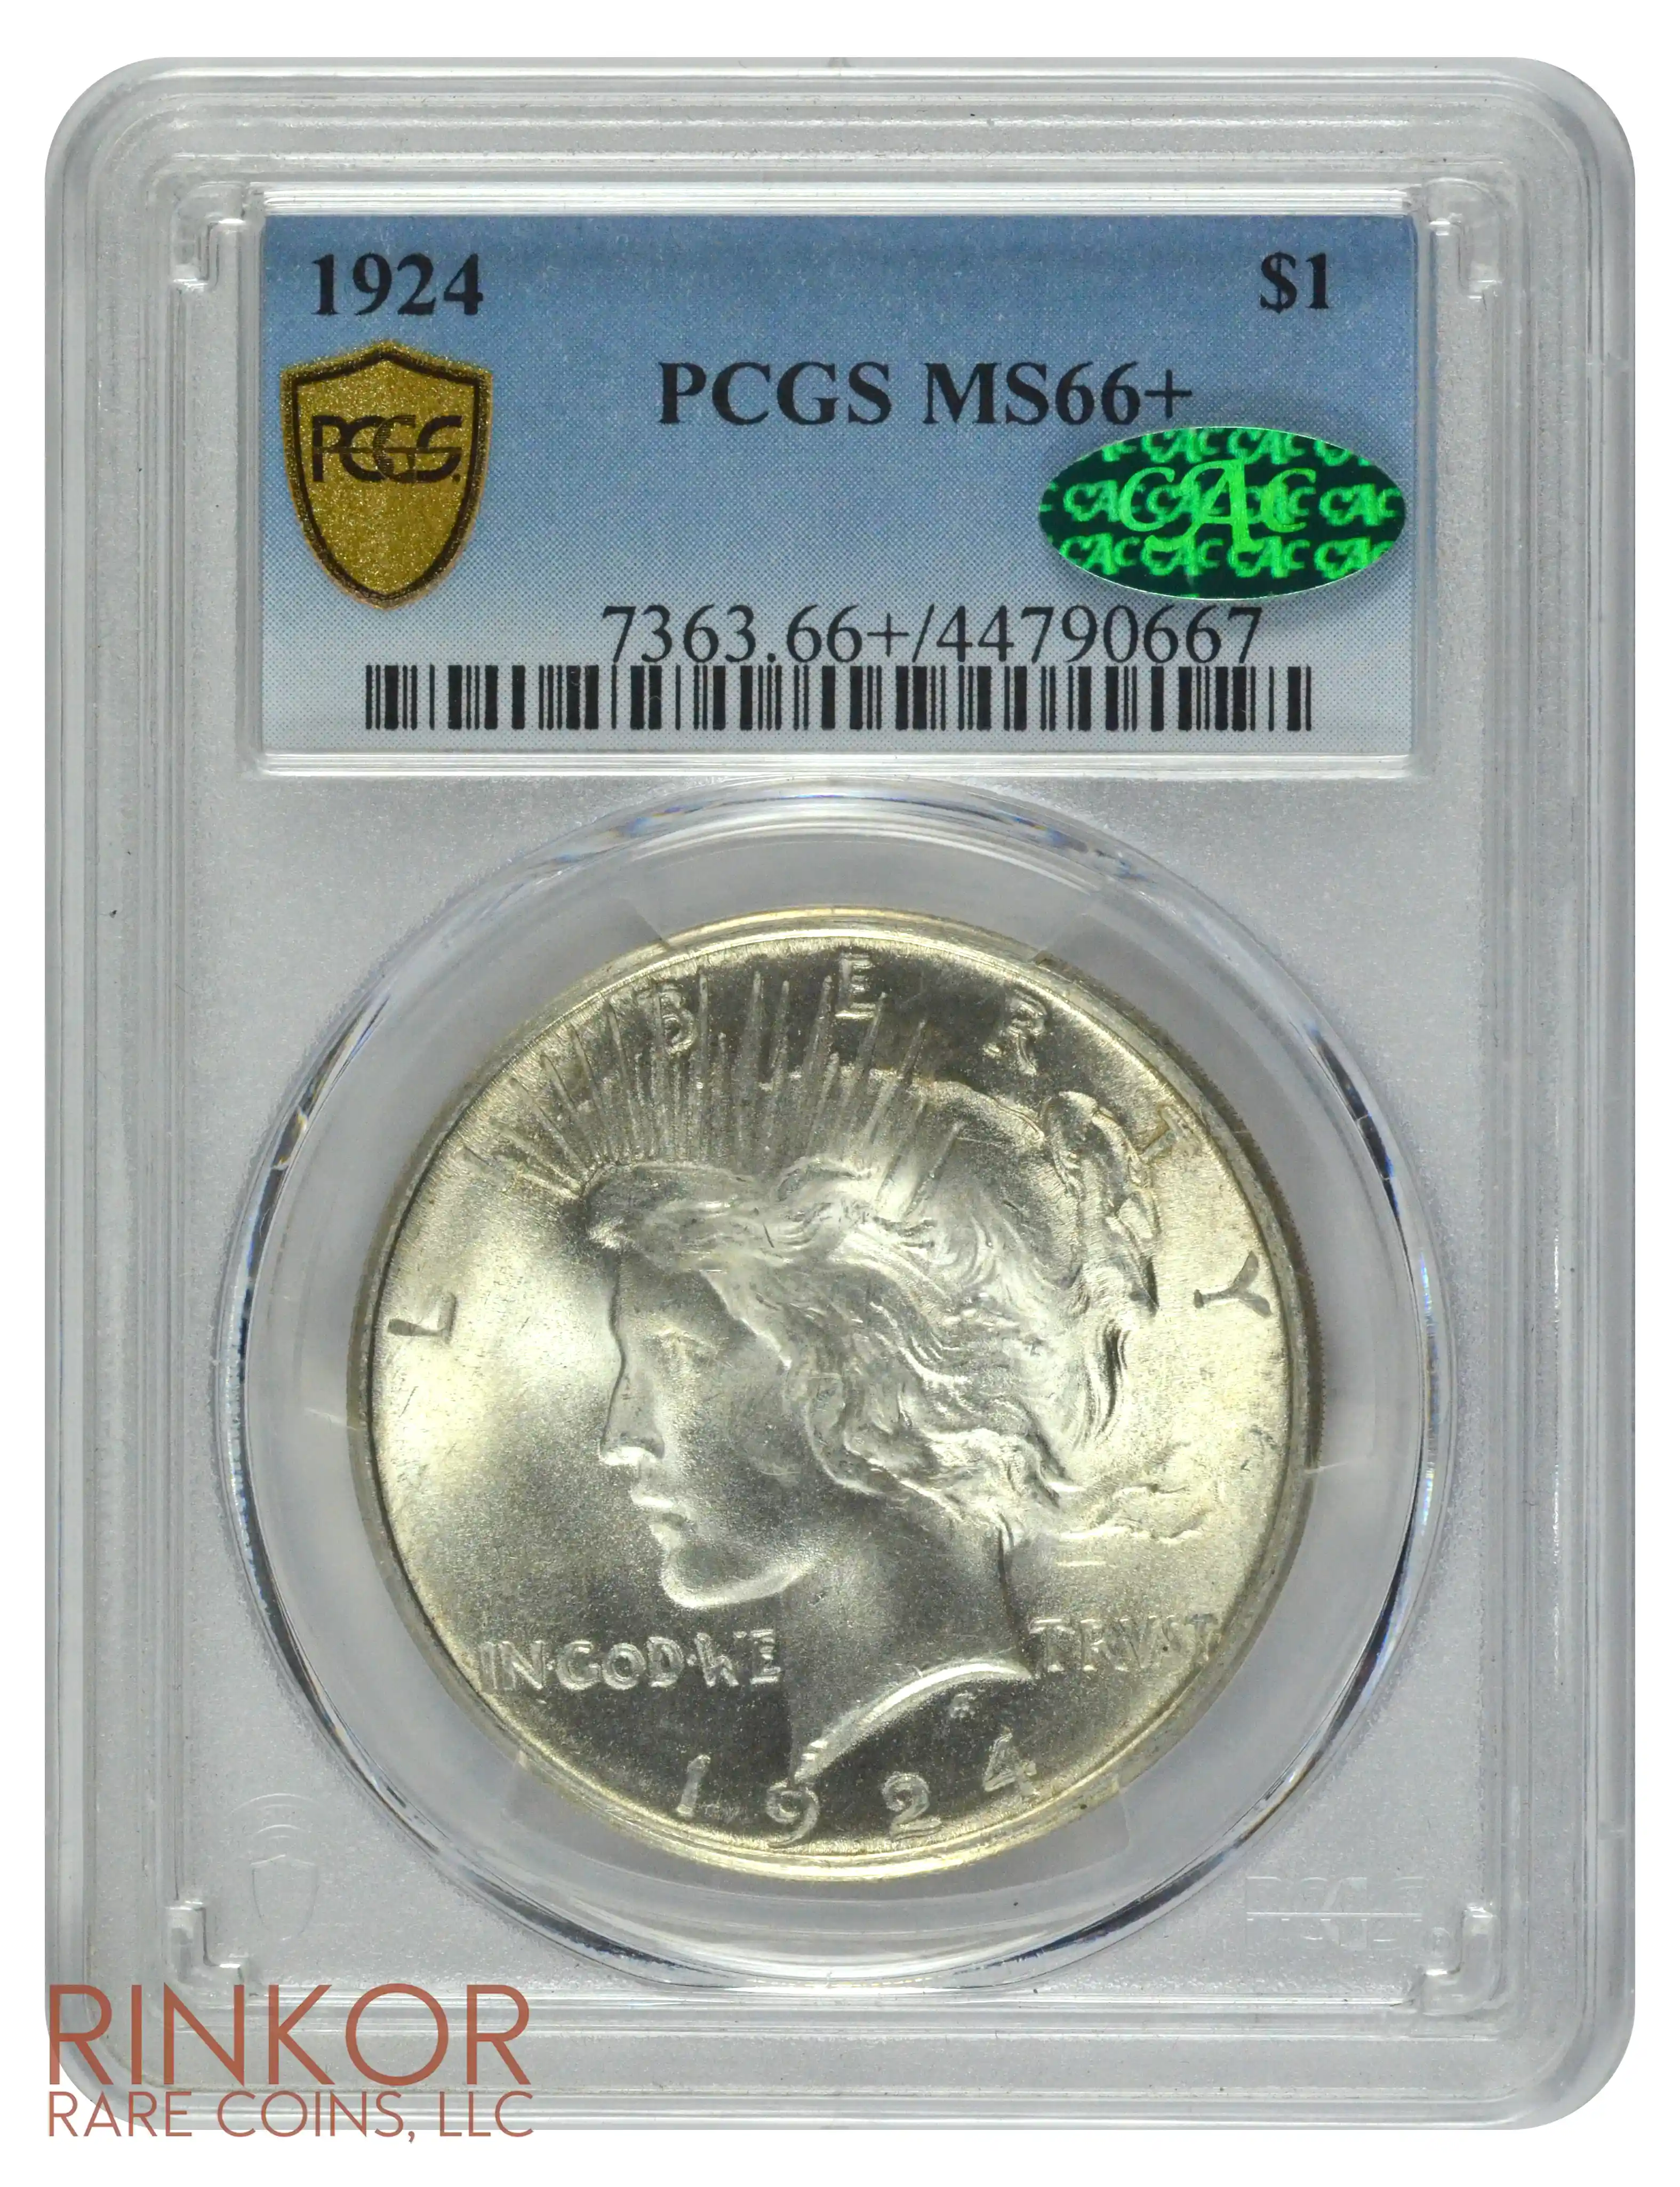 1924 $1 PCGS MS 66+ CAC